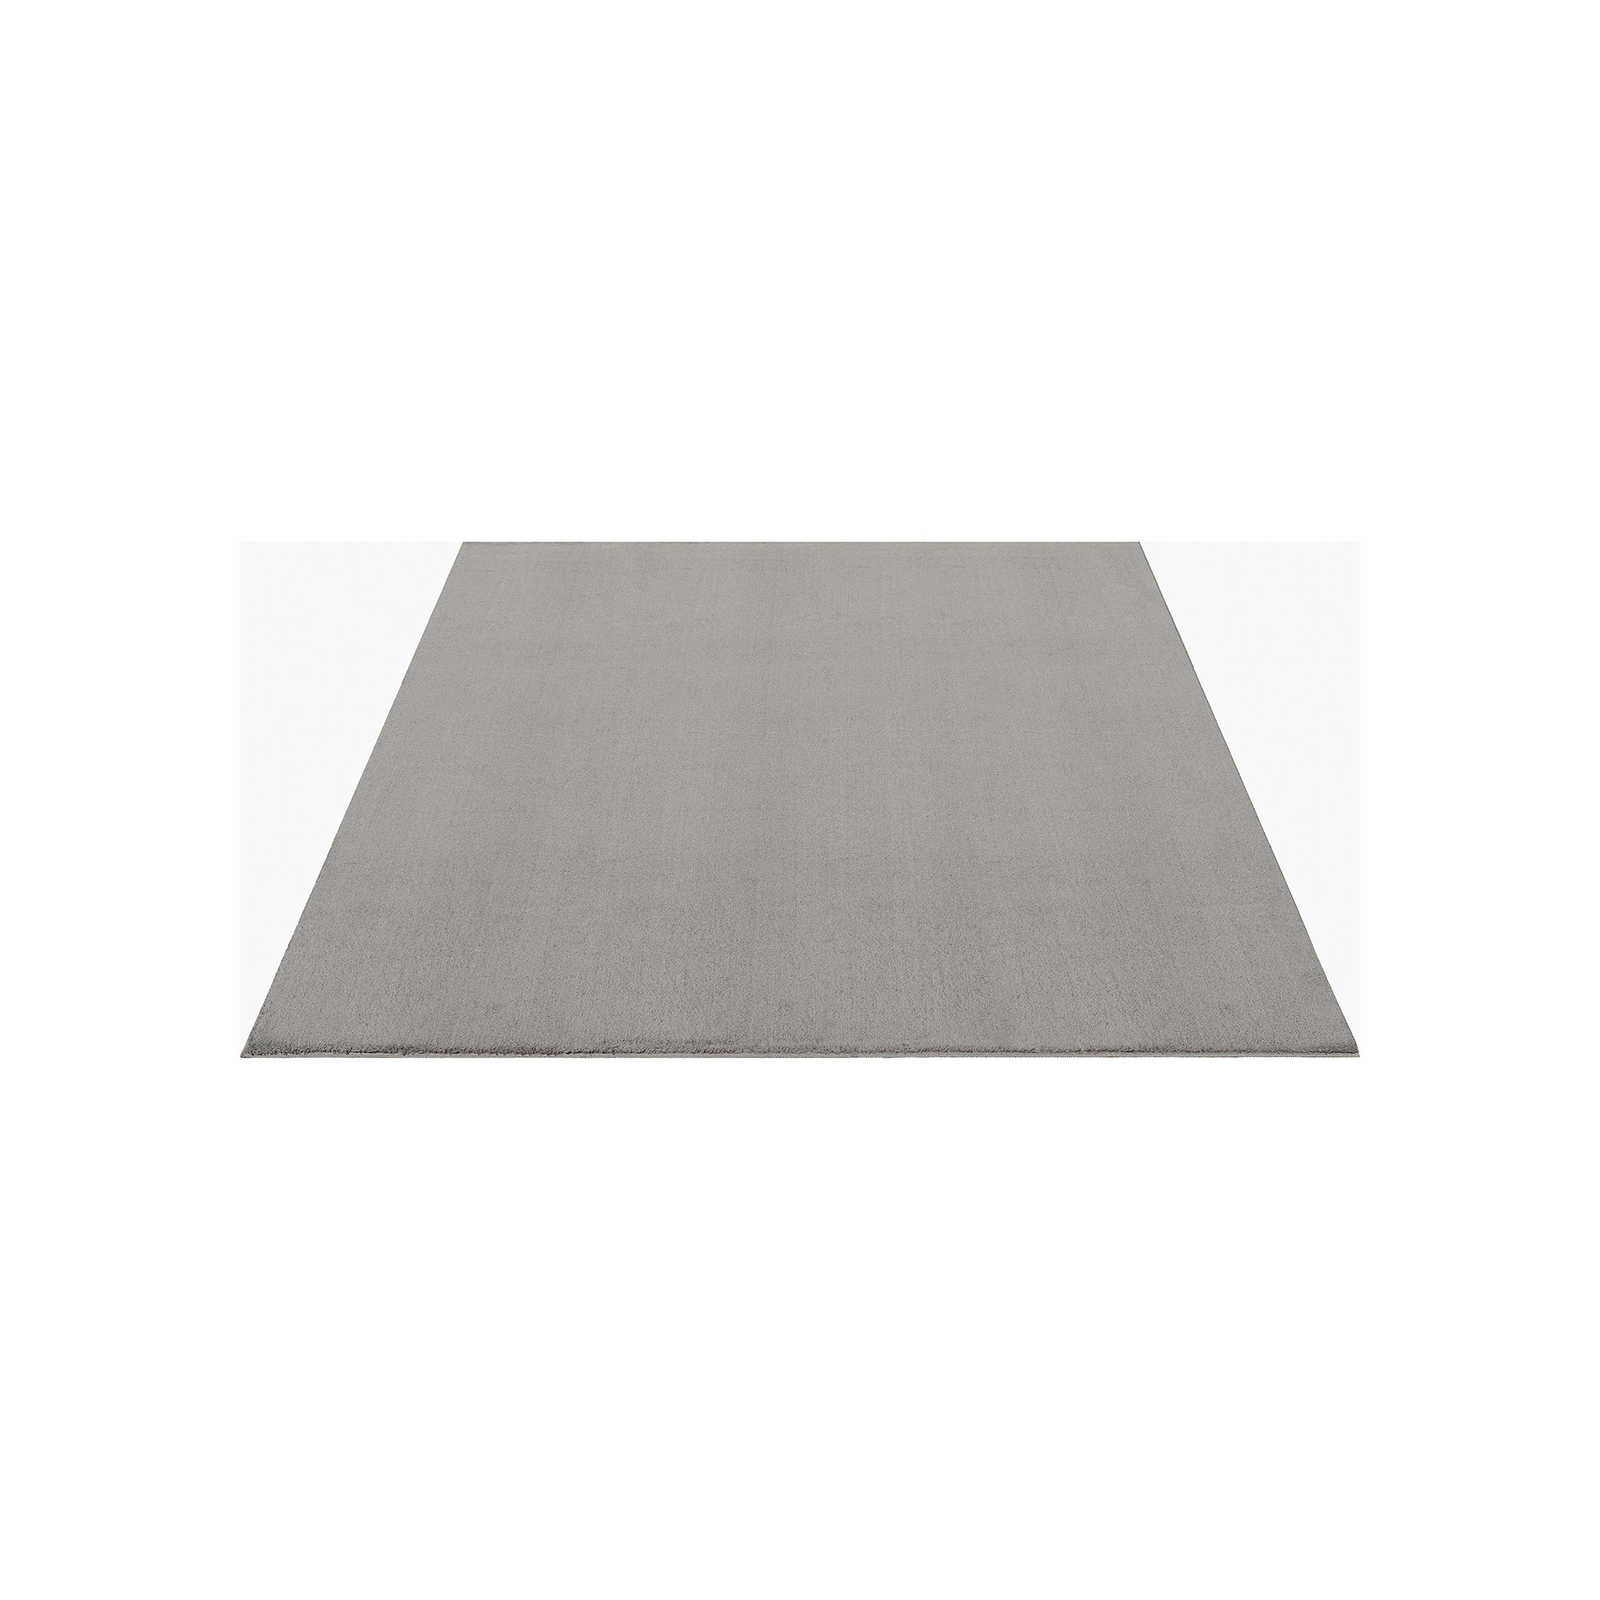 Fashionable high pile carpet in sand - 230 x 160 cm
